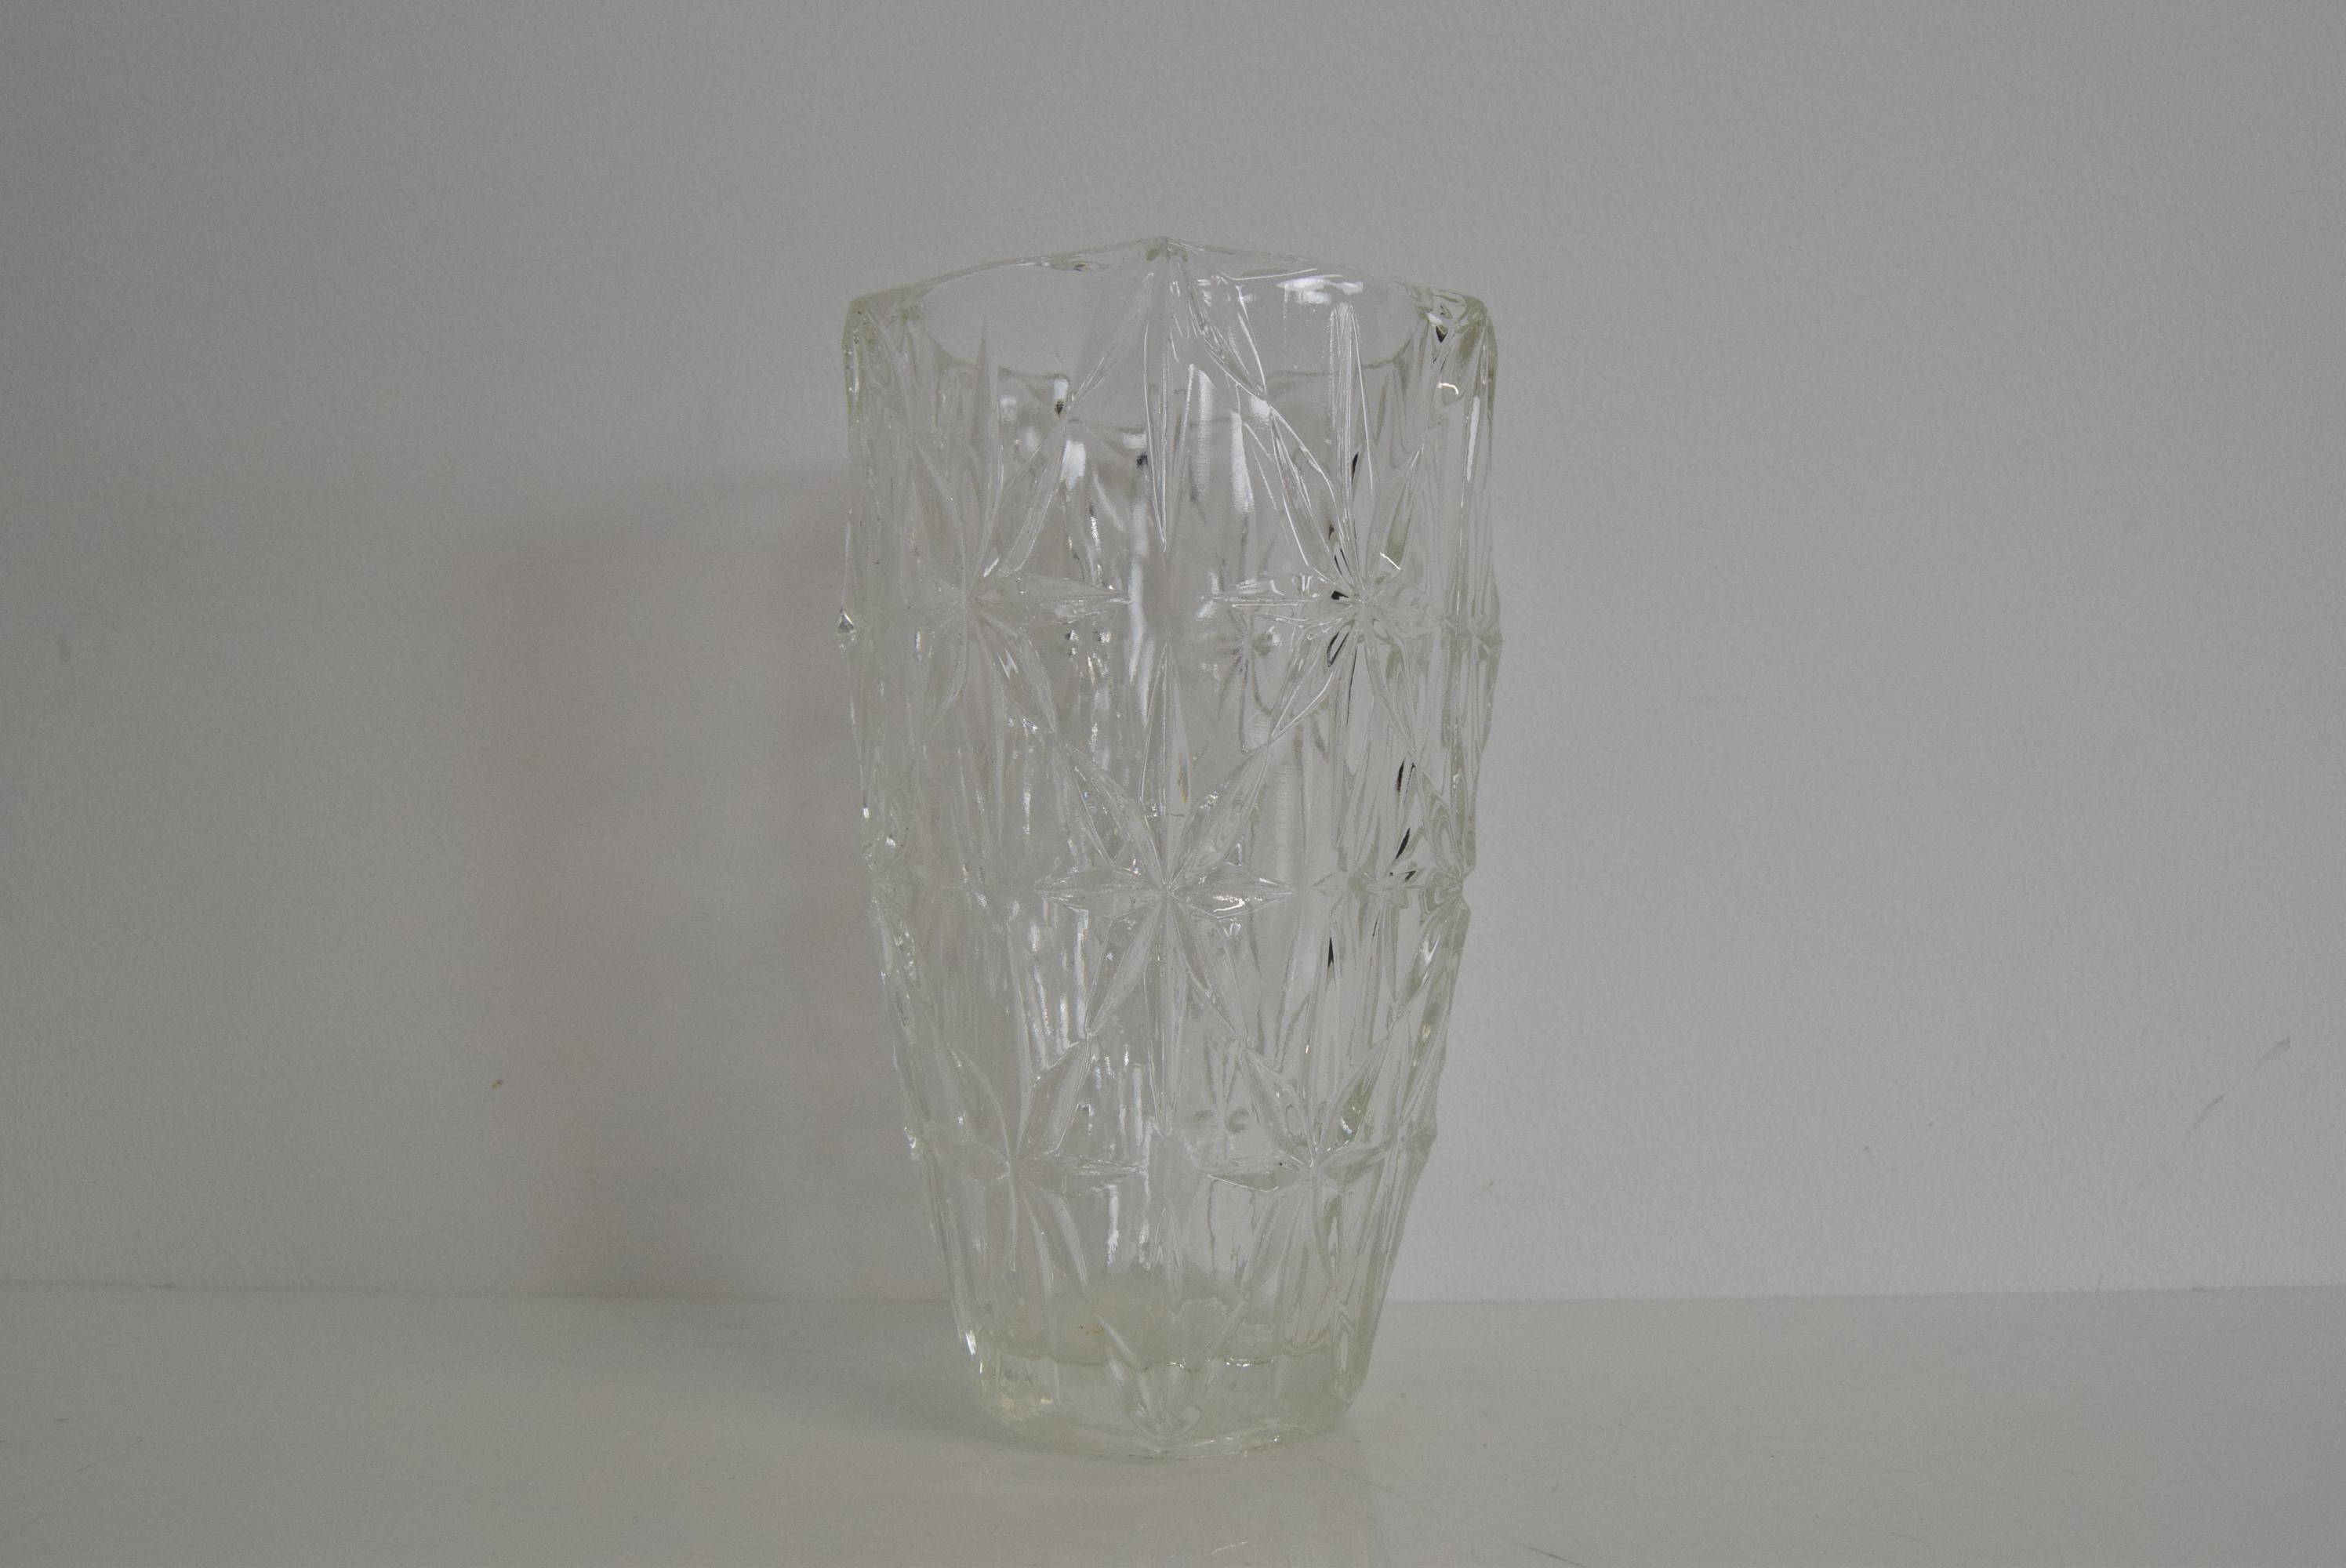 Made in Czechoslovakia
Made of glass
Original condition.